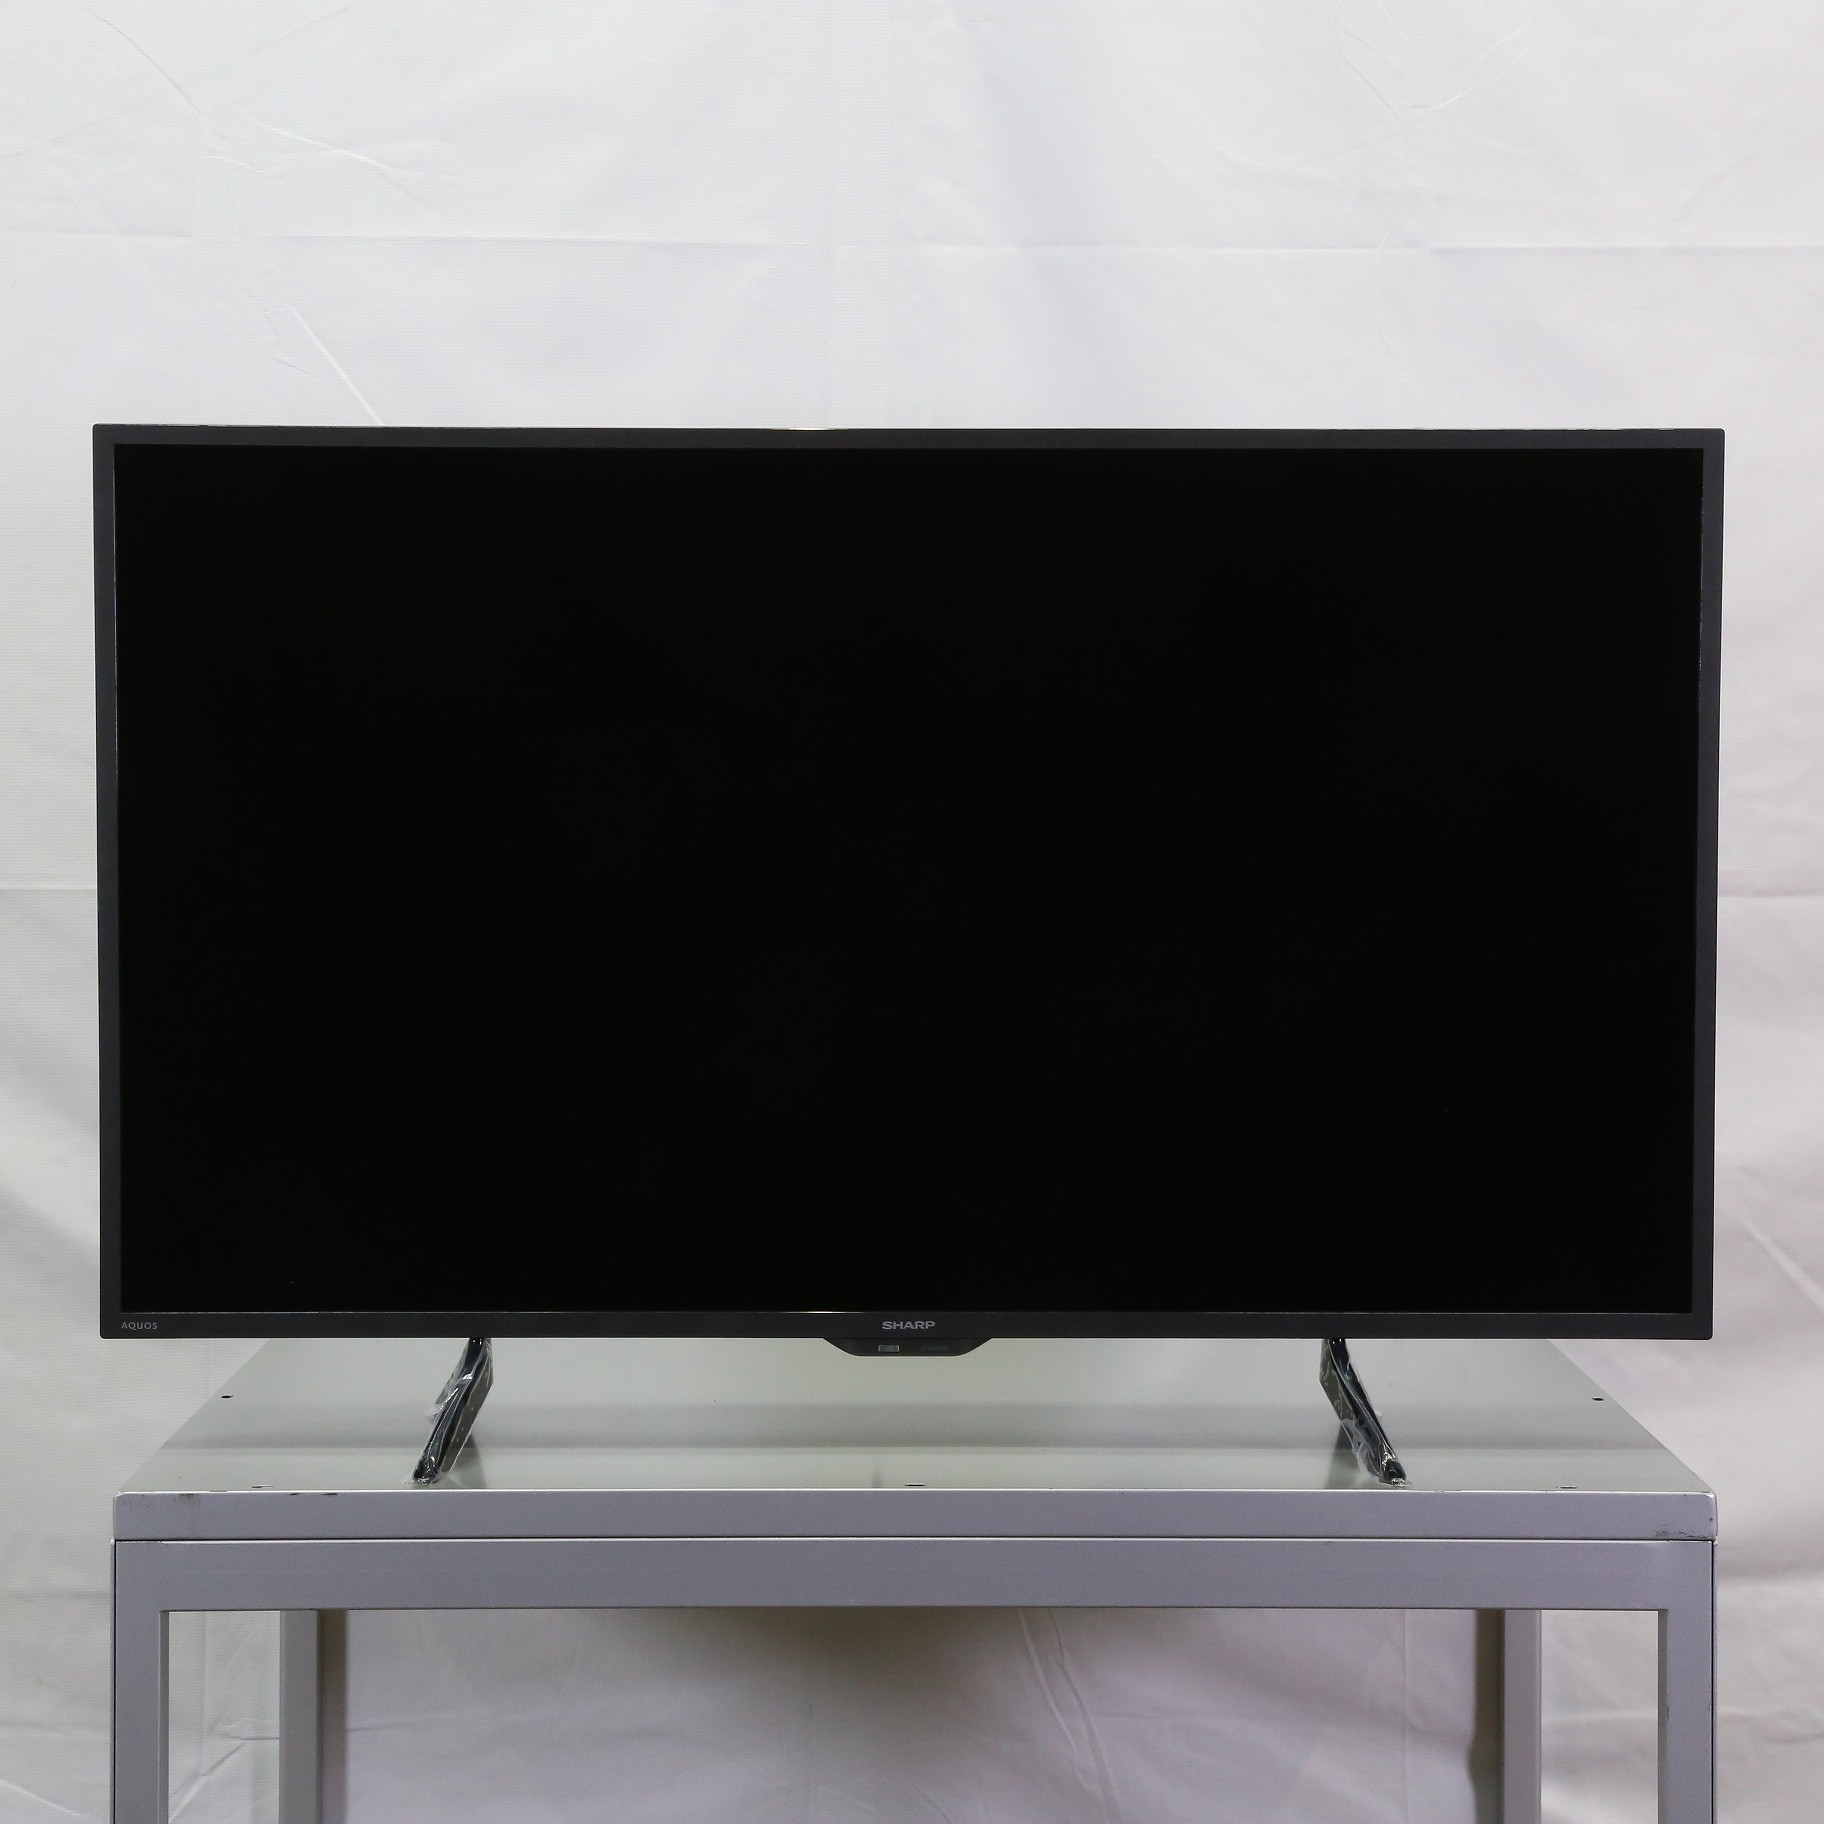 SHARP AQUOS 42型 テレビ本体白 2008年製 - テレビ/映像機器